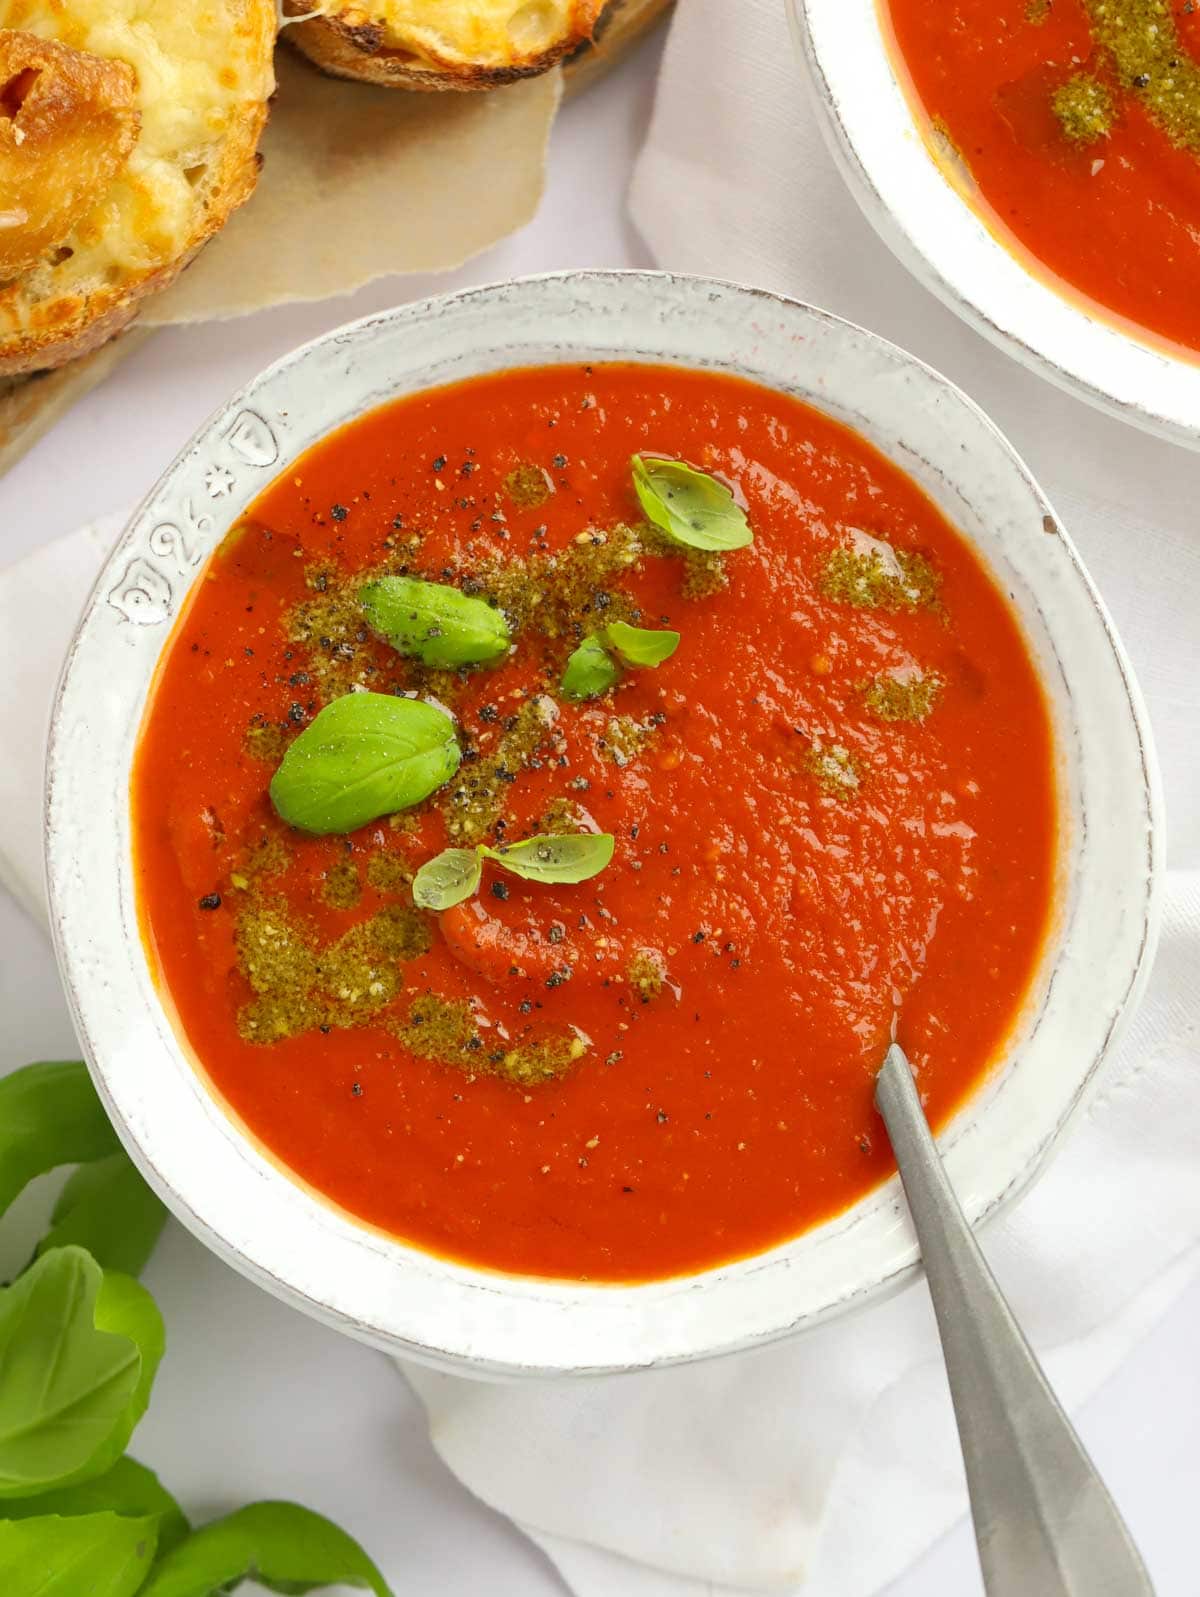 https://www.tamingtwins.com/wp-content/uploads/2021/01/easy-tomato-soup-2.jpg